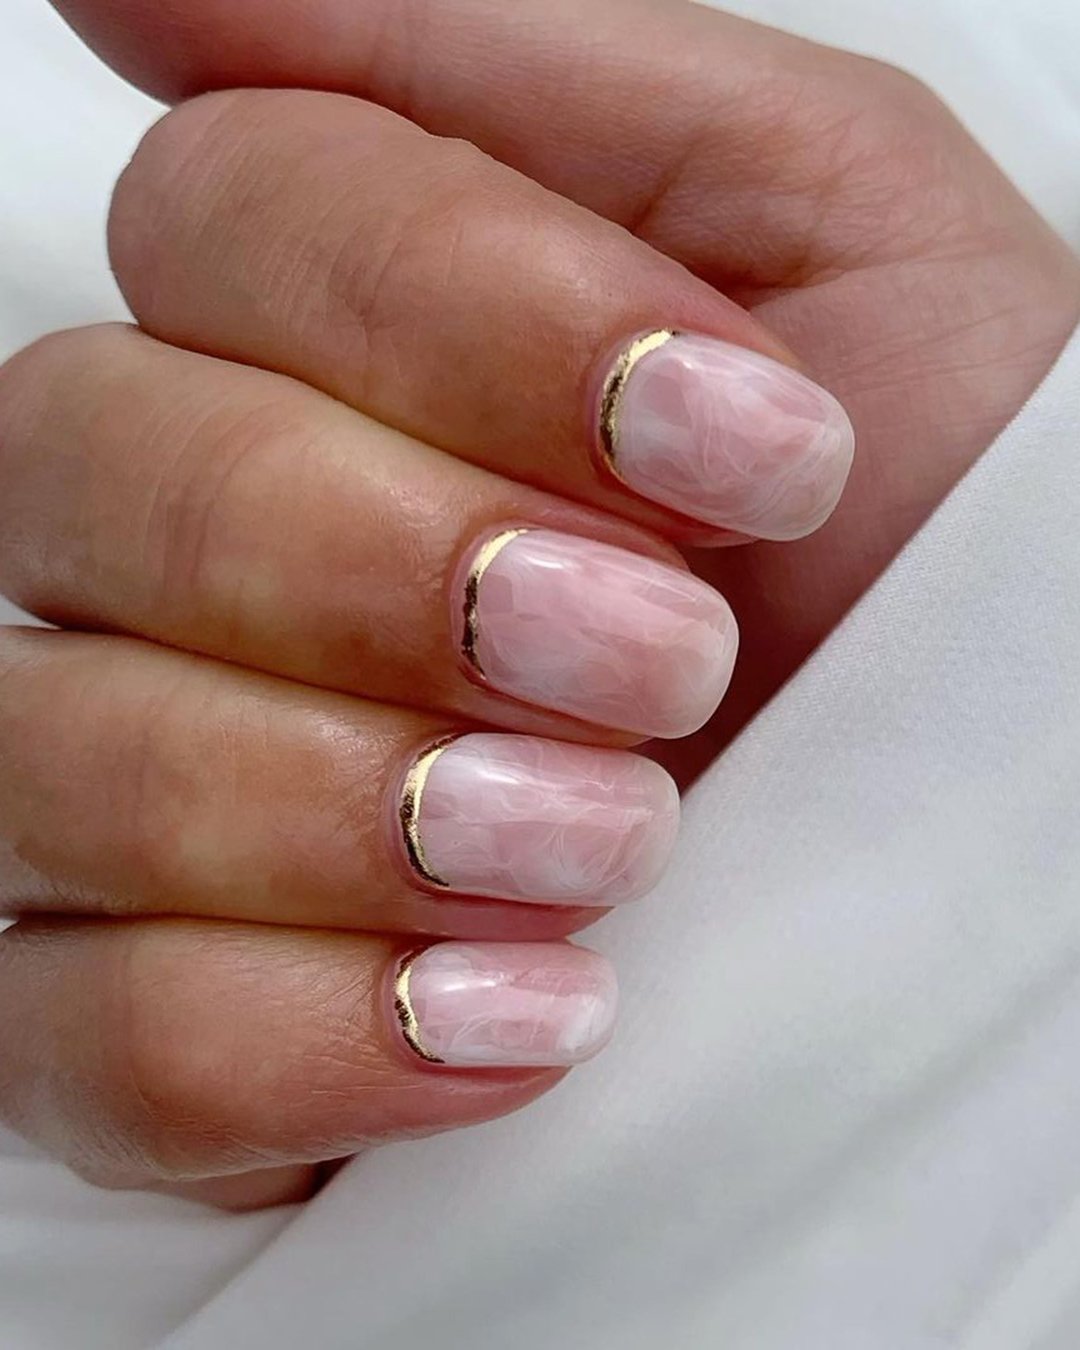 nail design for wedding pinl white marble gold design charsgelnails_